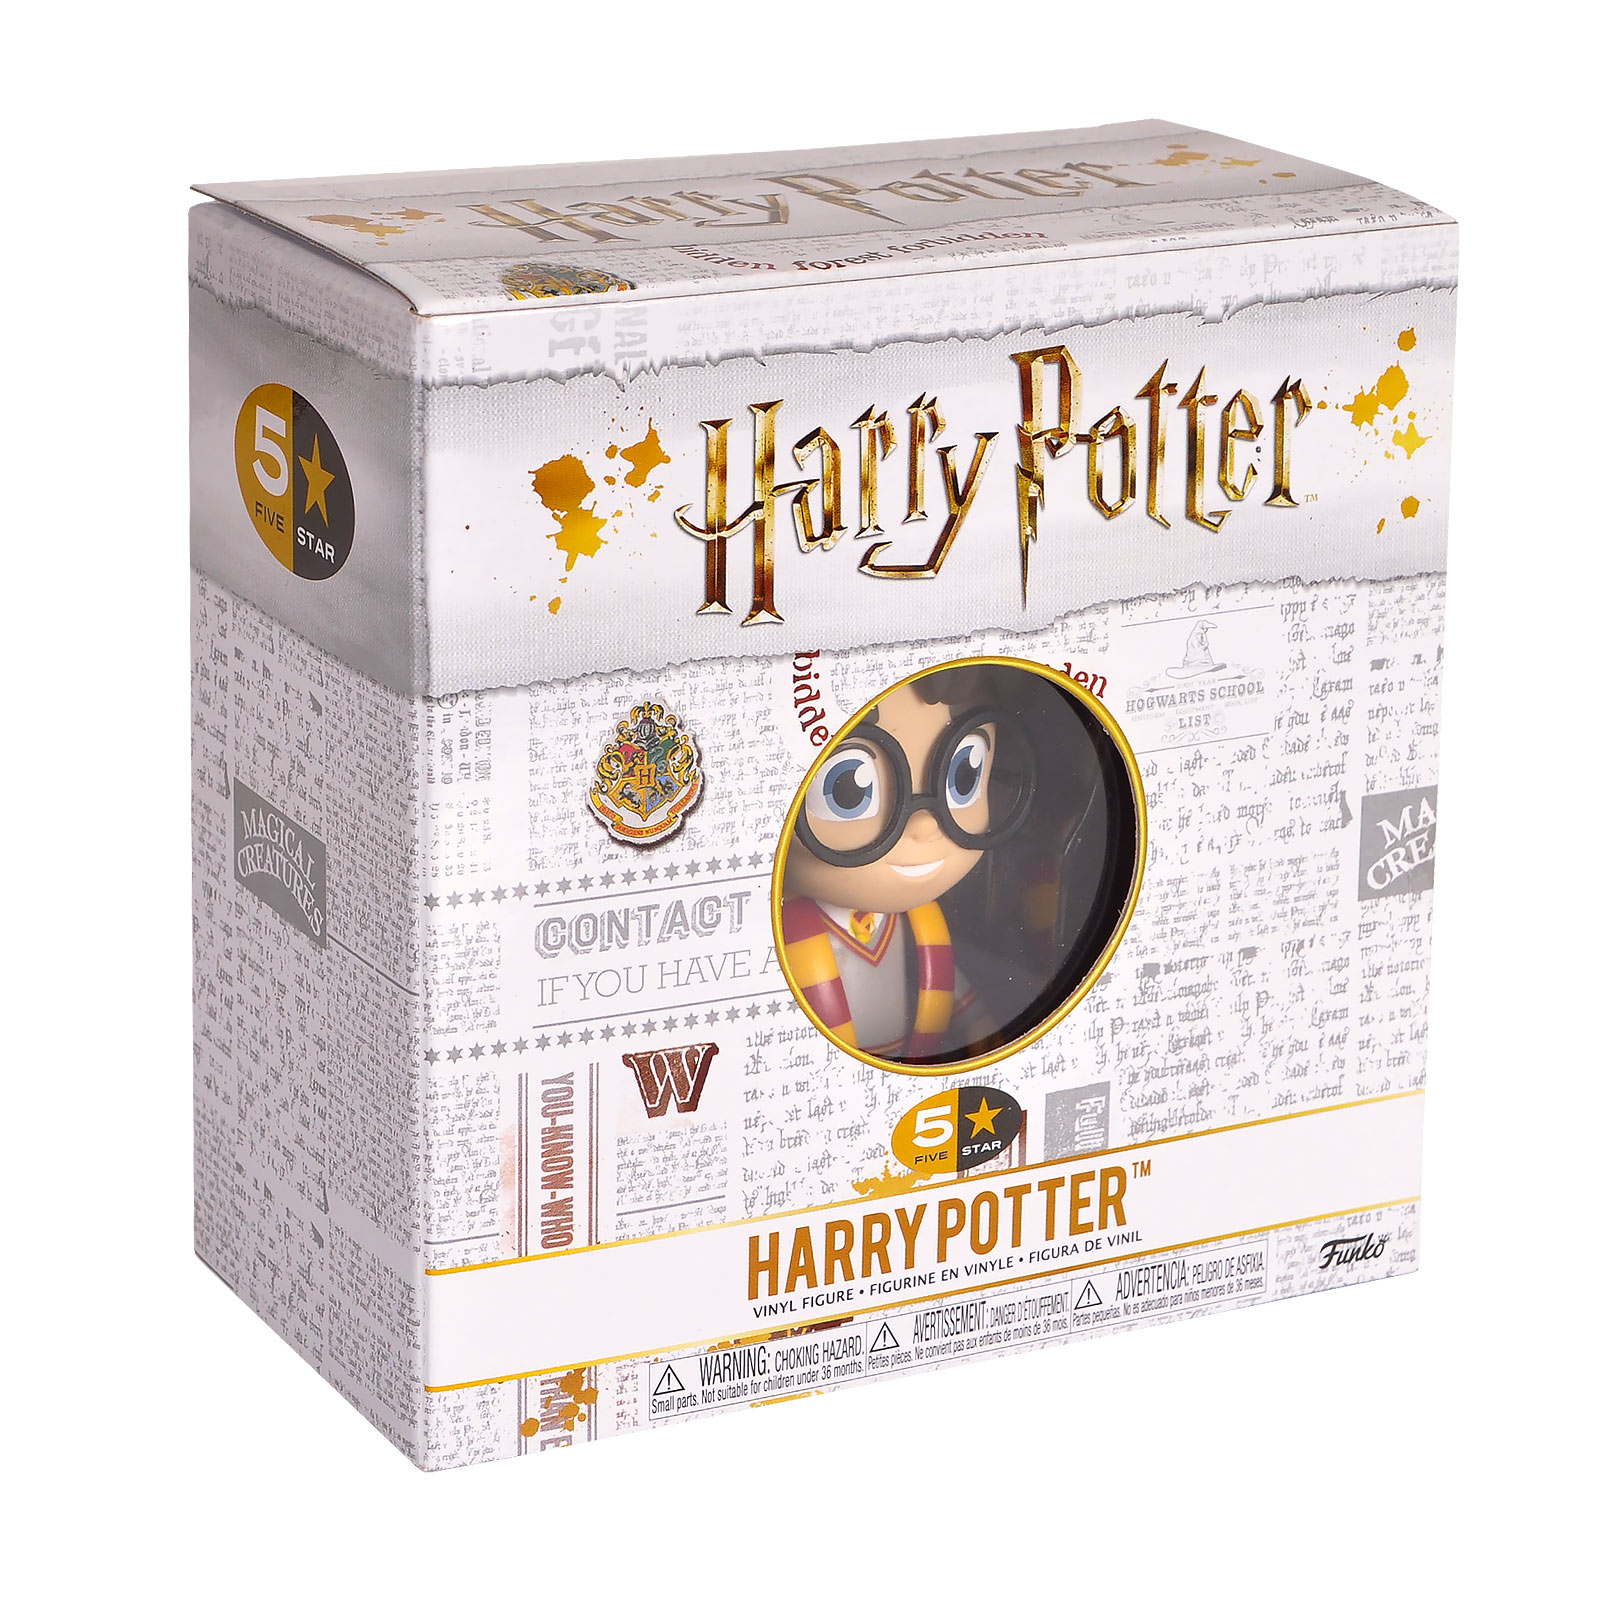 Harry Potter Gryffondor Funko Five Star Figurine